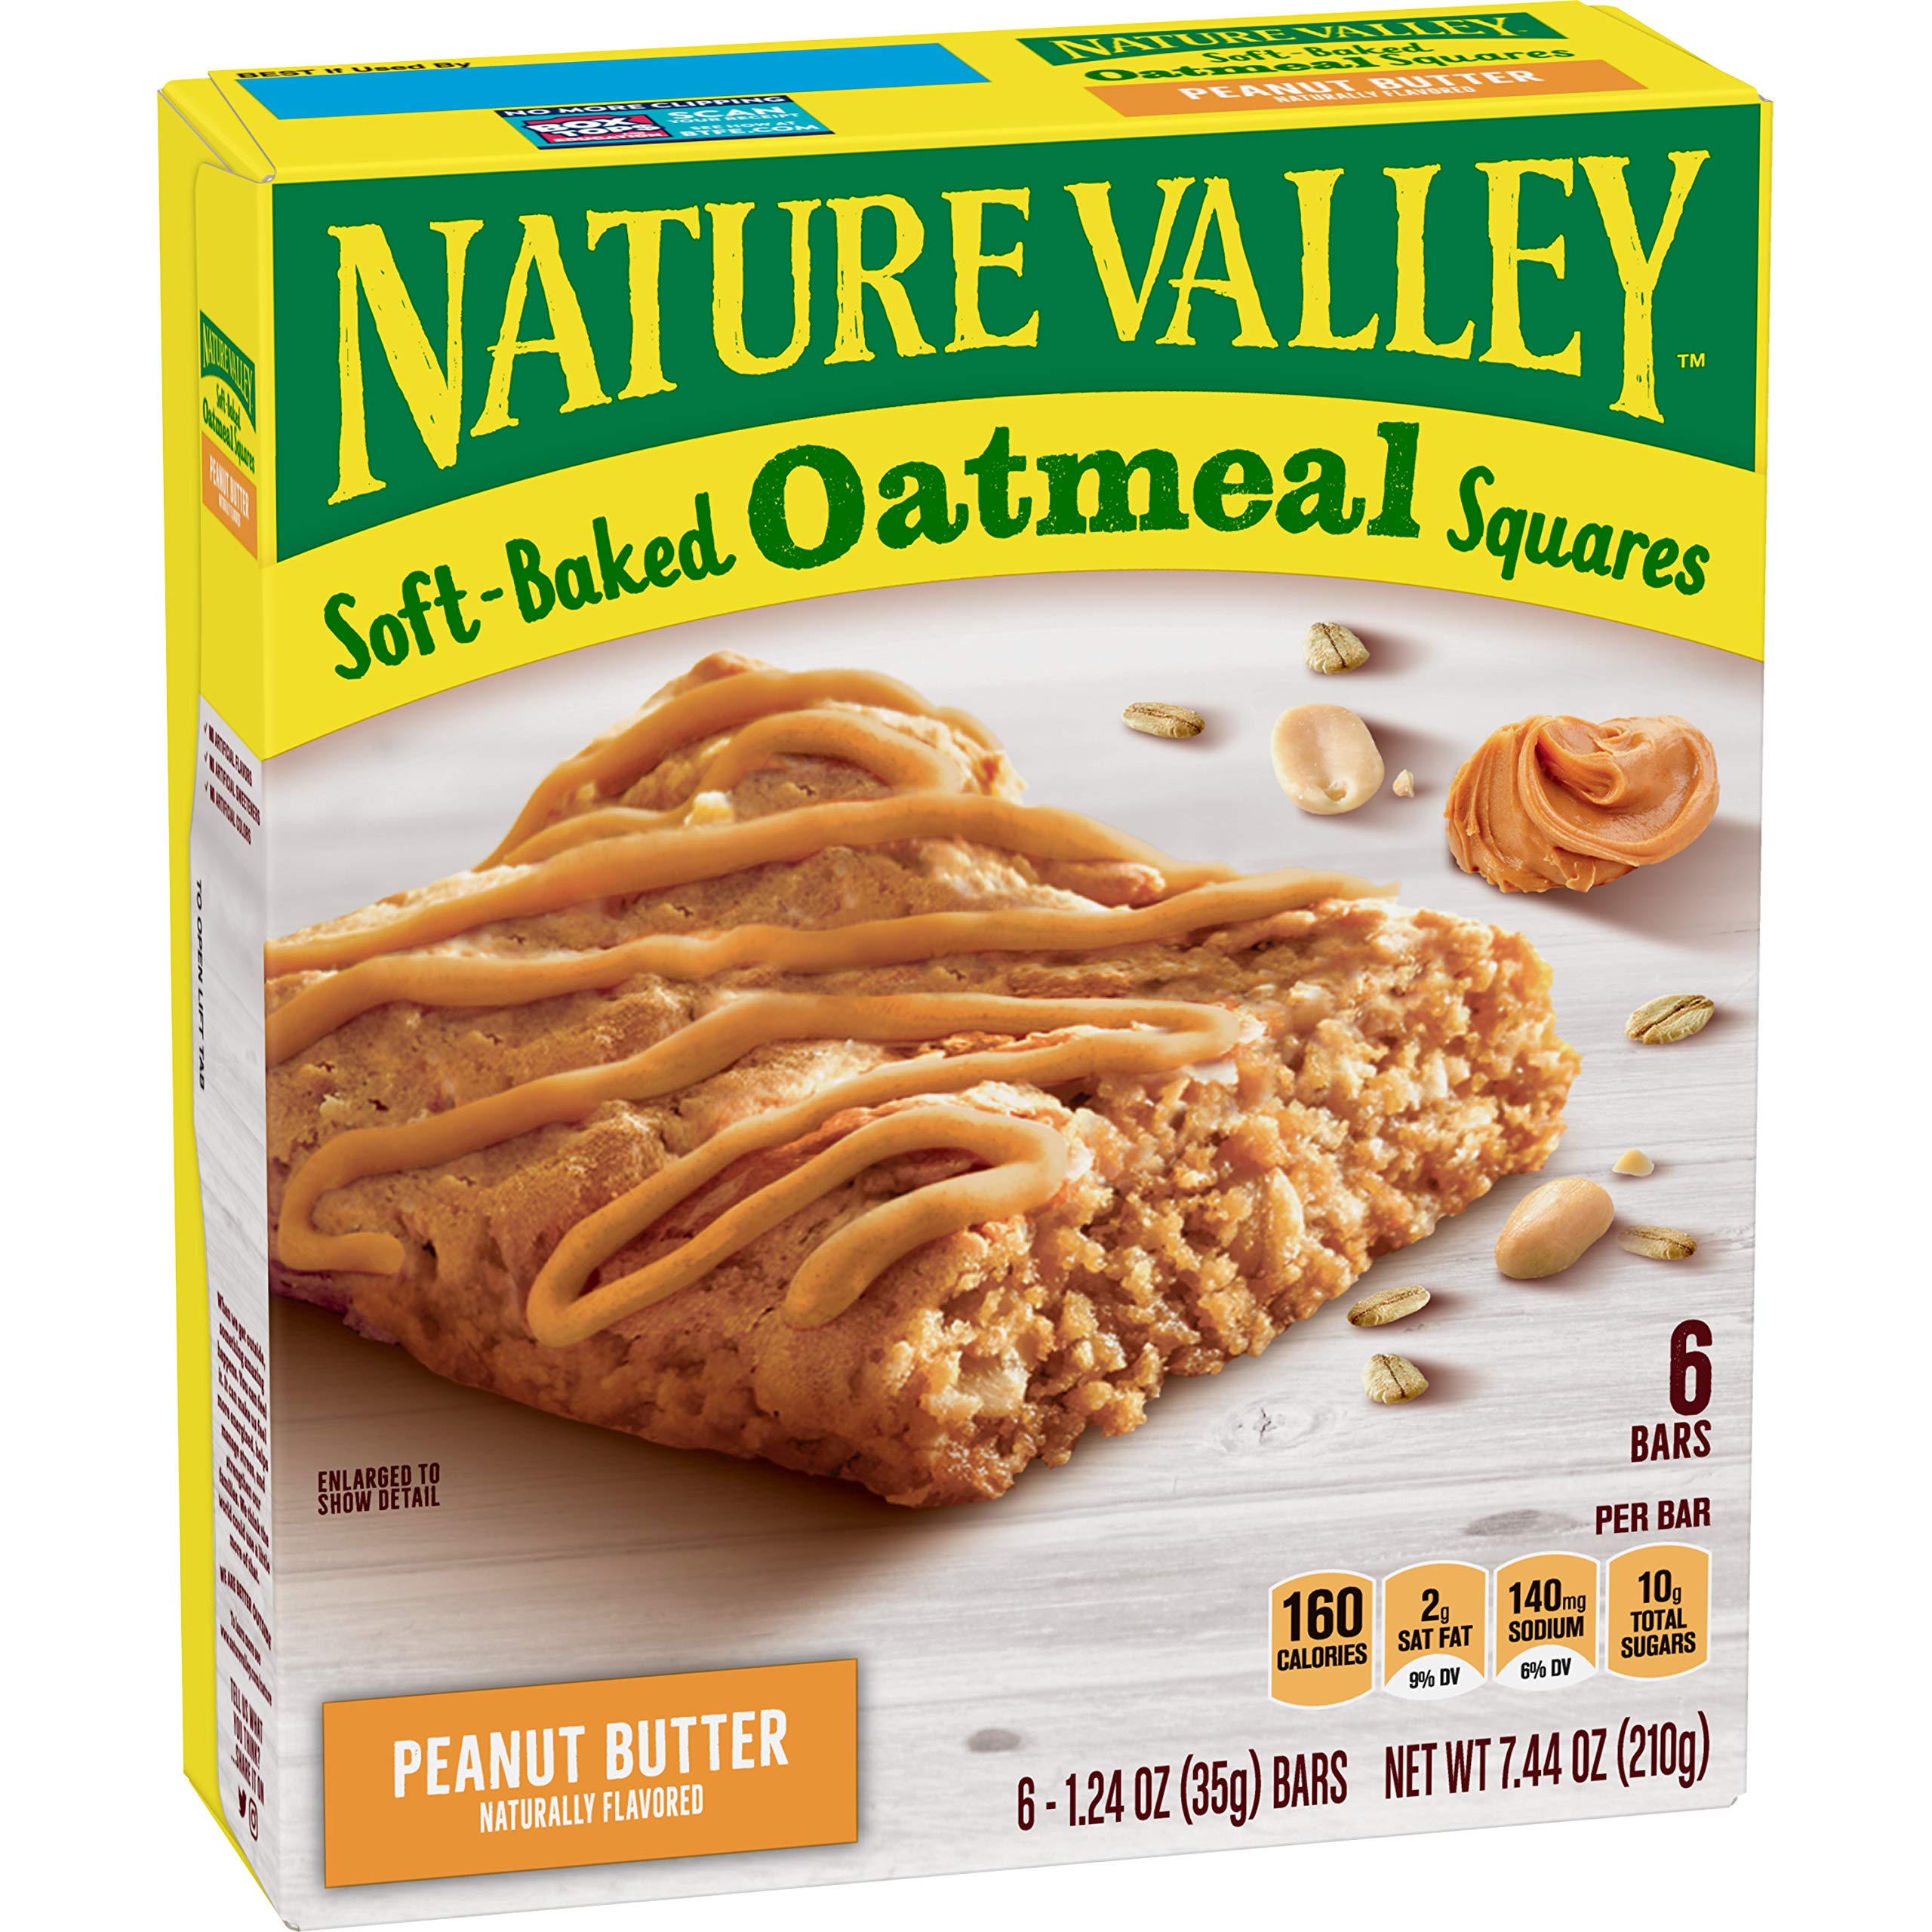 Nature Valley Granola Bars Sweet & Salty Nut Dark Chocolate Peanut & Almond  - 6-1.24 Oz